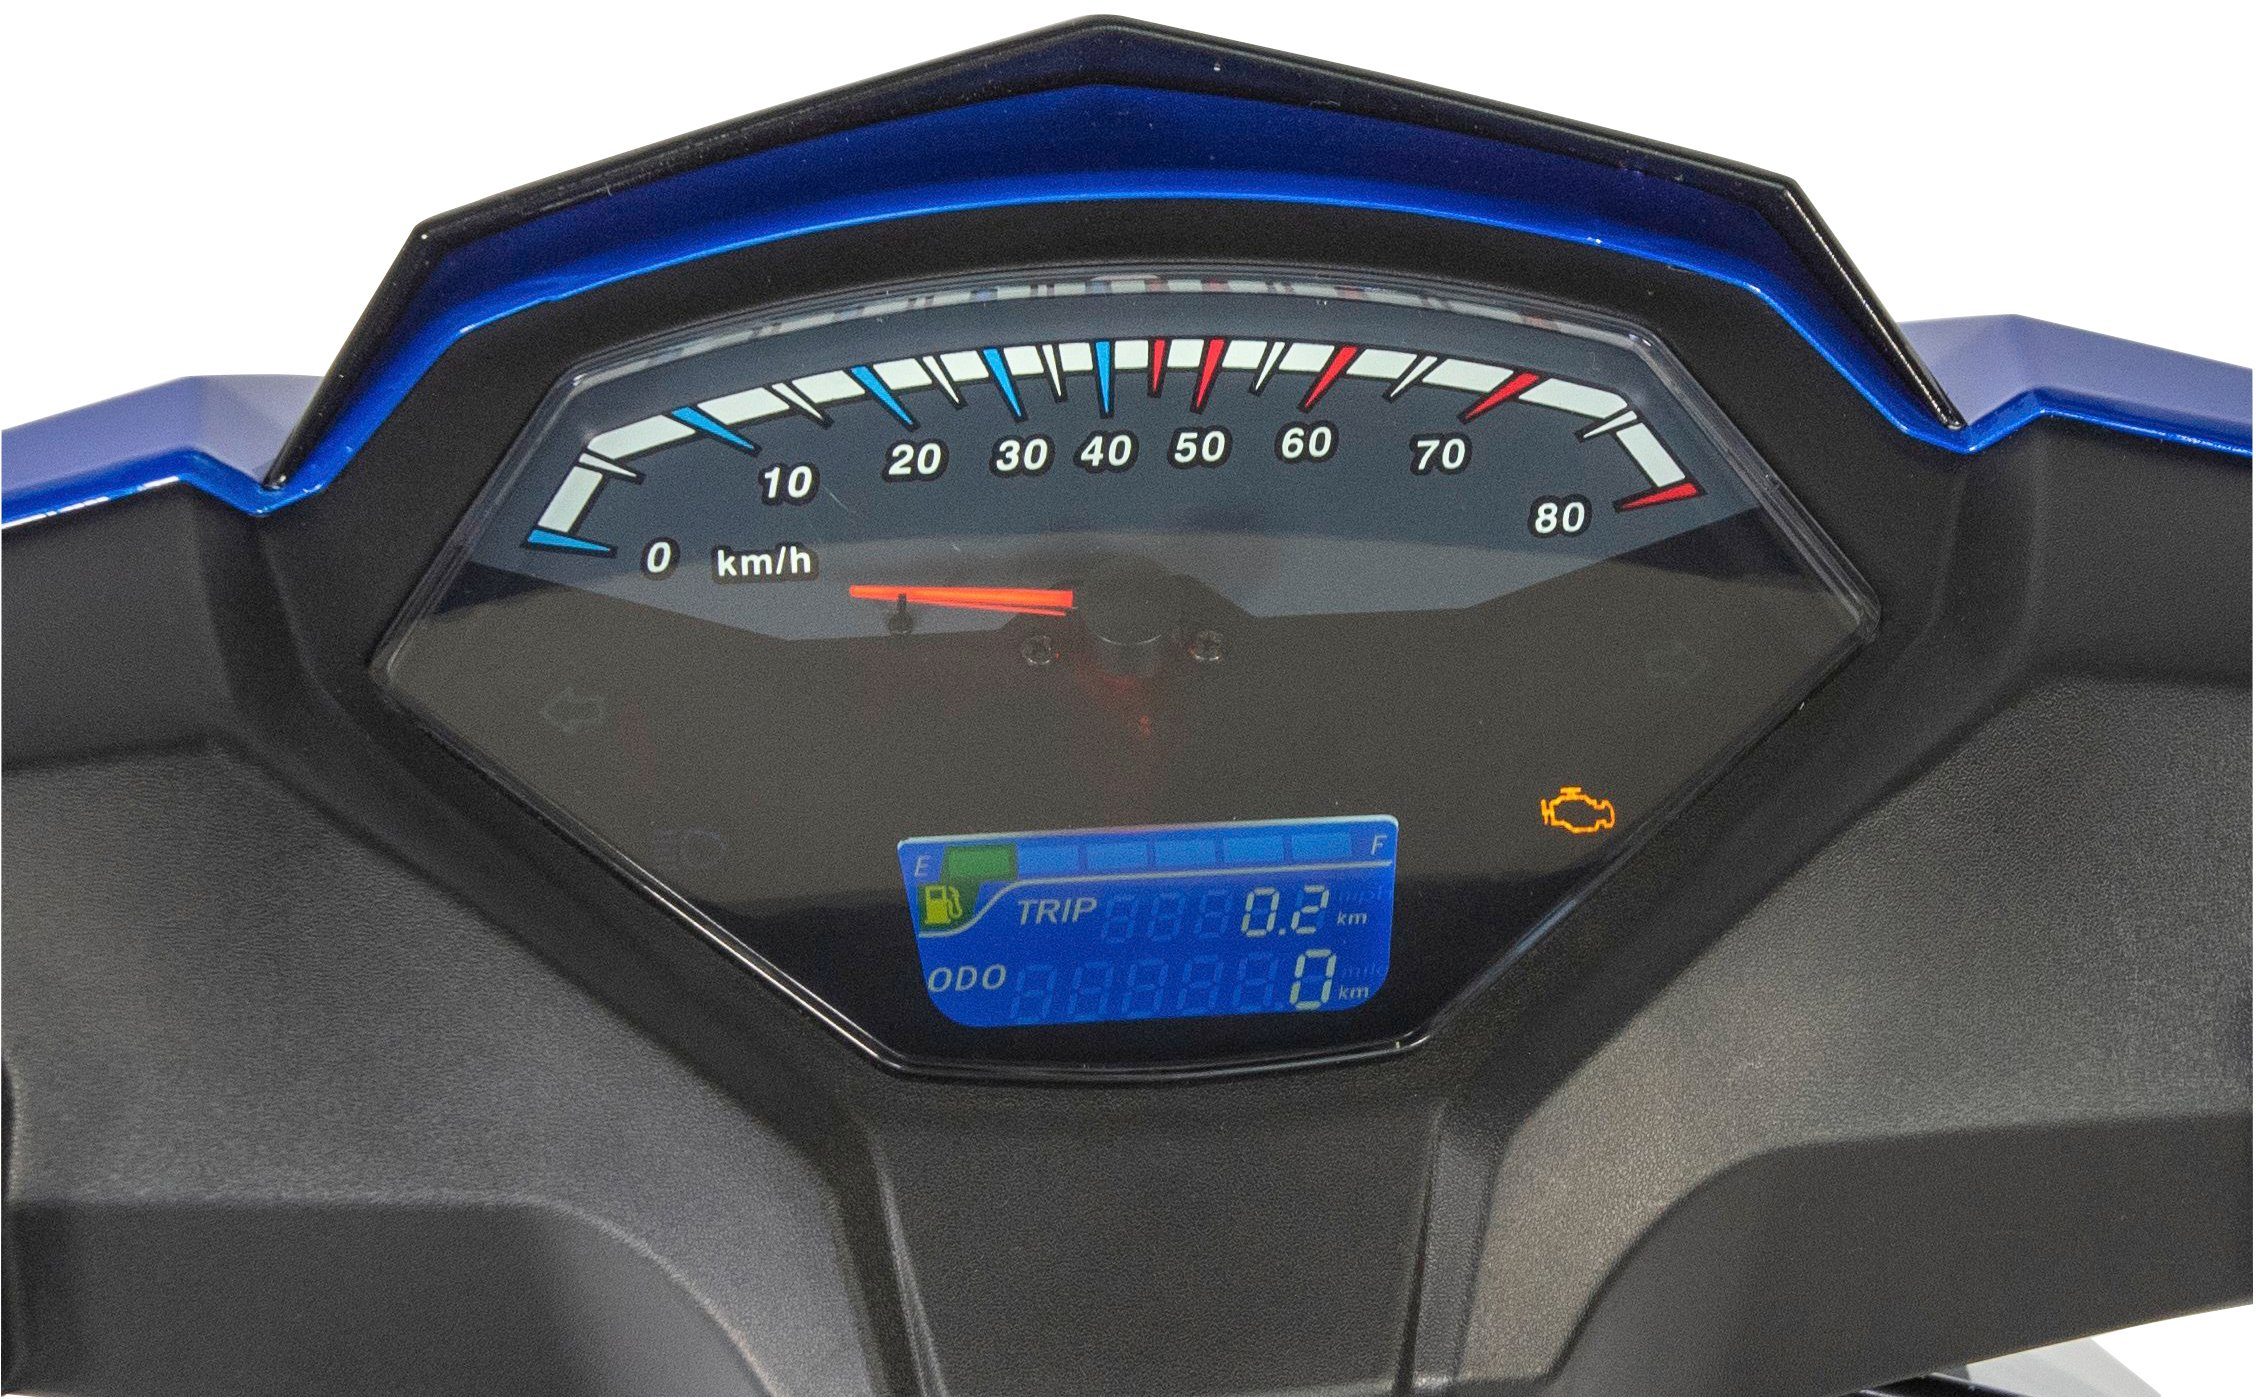 ccm, 25 km/h, tlg., X Mofaroller (Komplett-Set, 5, Euro Sonic 50-25, 2 50 Topcase), UNION mit Topcase blau, GT blau inkl.